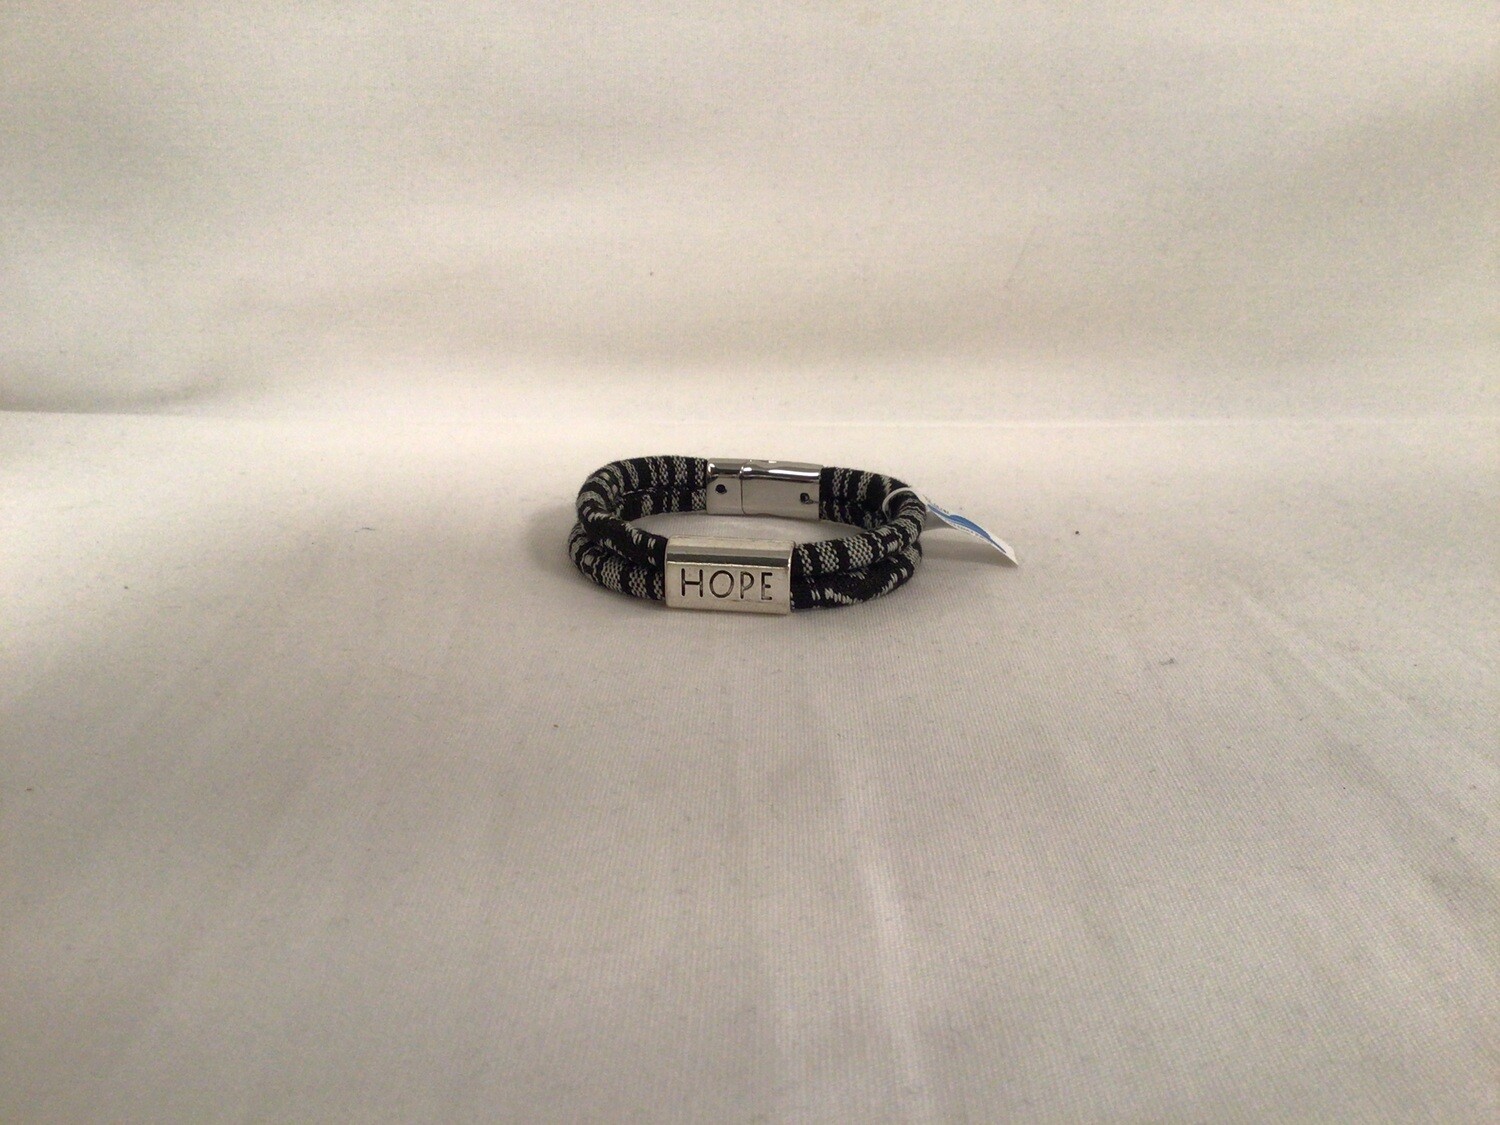 HOPE Affirmation Cotton Cord Bracelet, Black & White